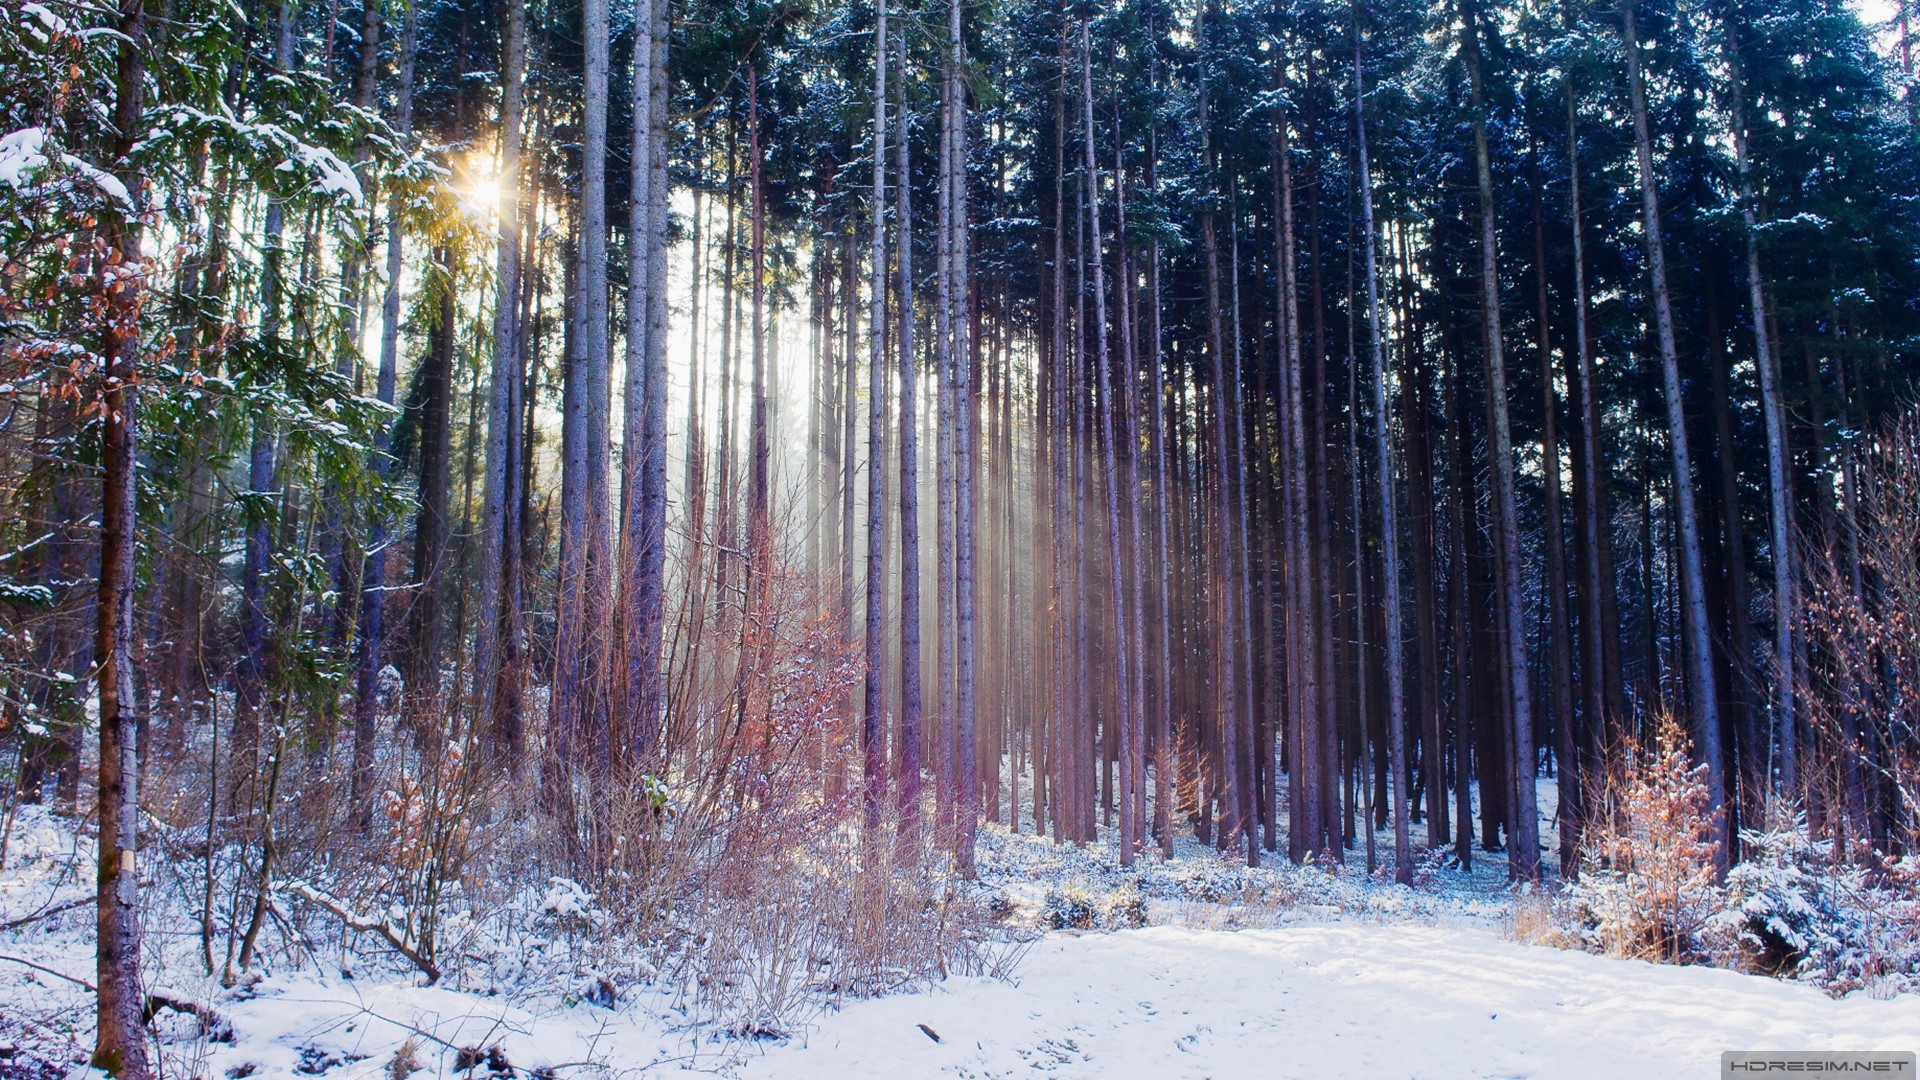 ağaç,orman,kar,çam,güneş